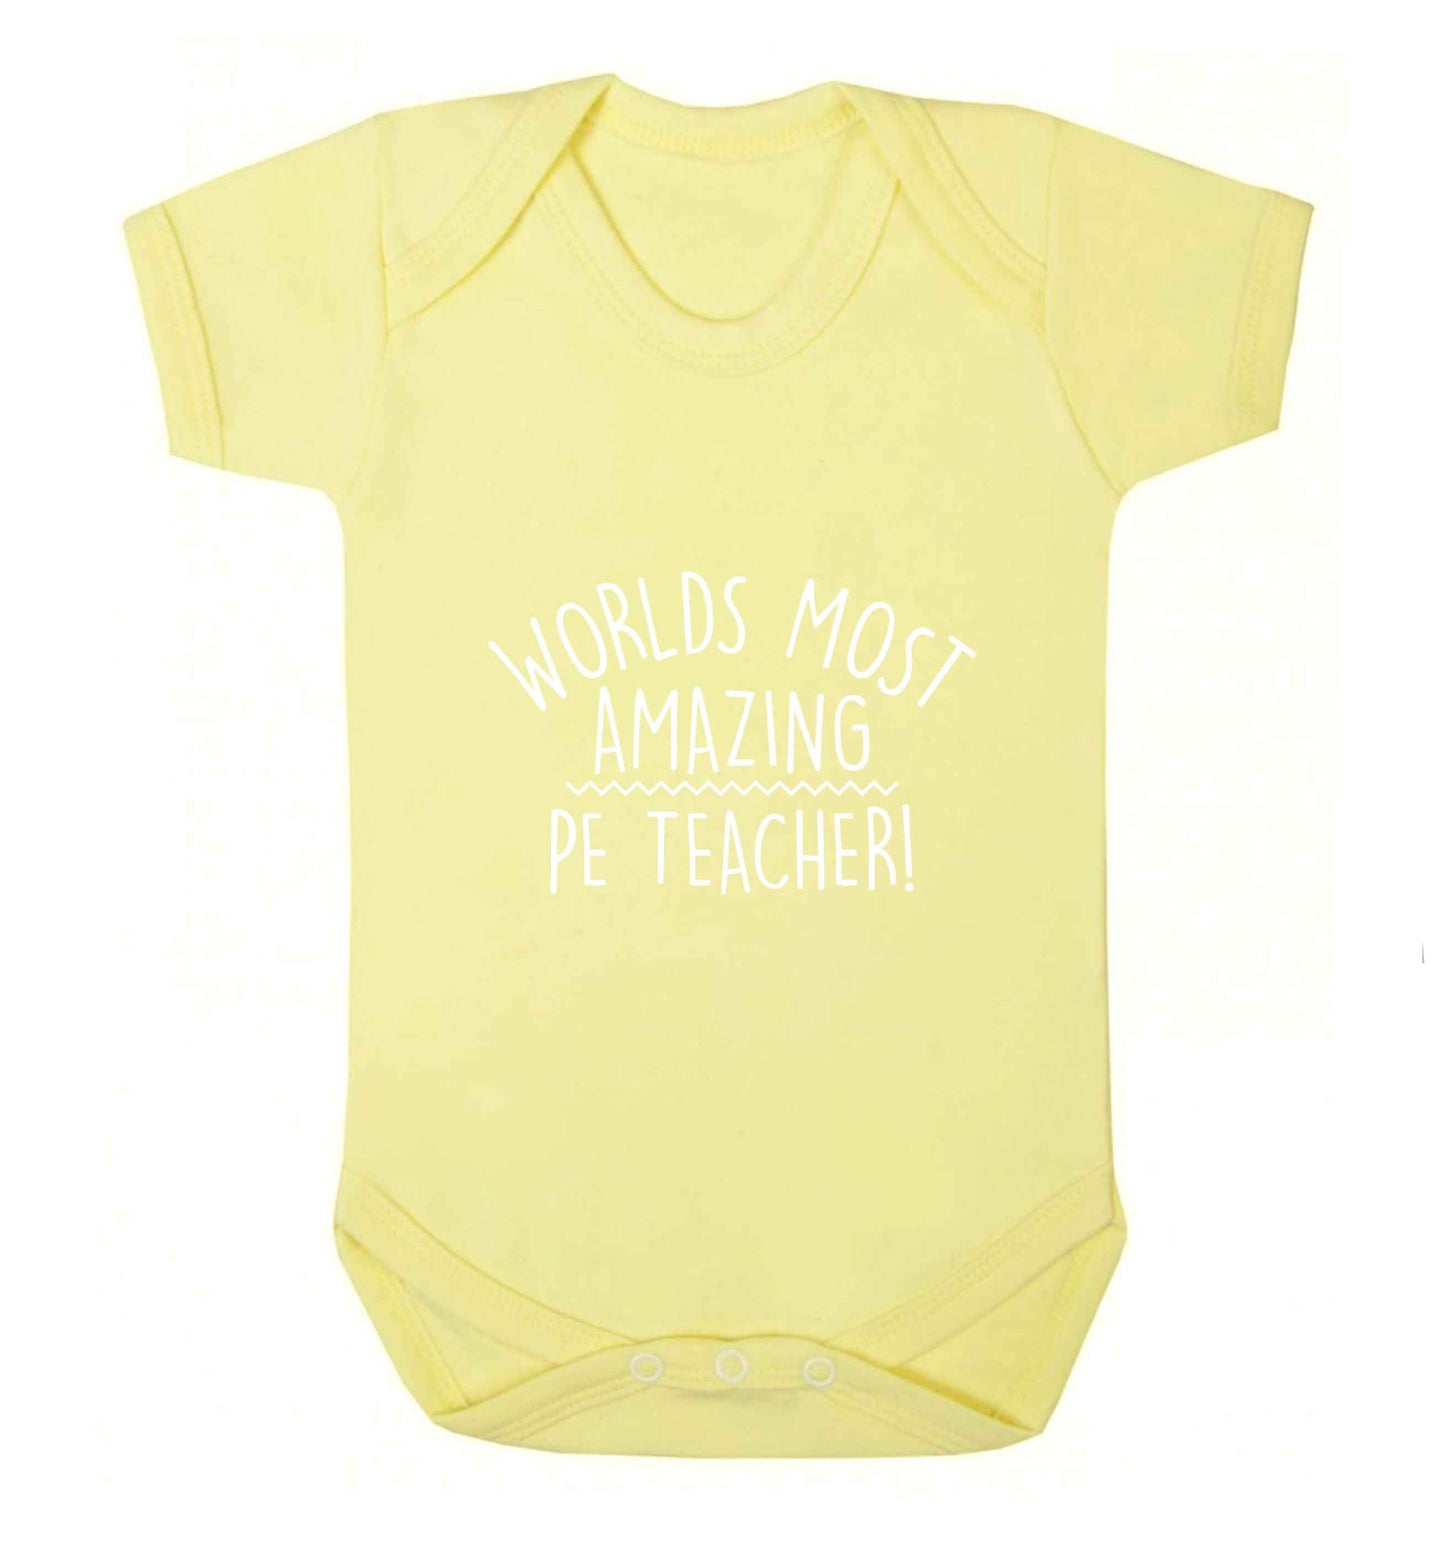 Worlds most amazing PE teacher baby vest pale yellow 18-24 months